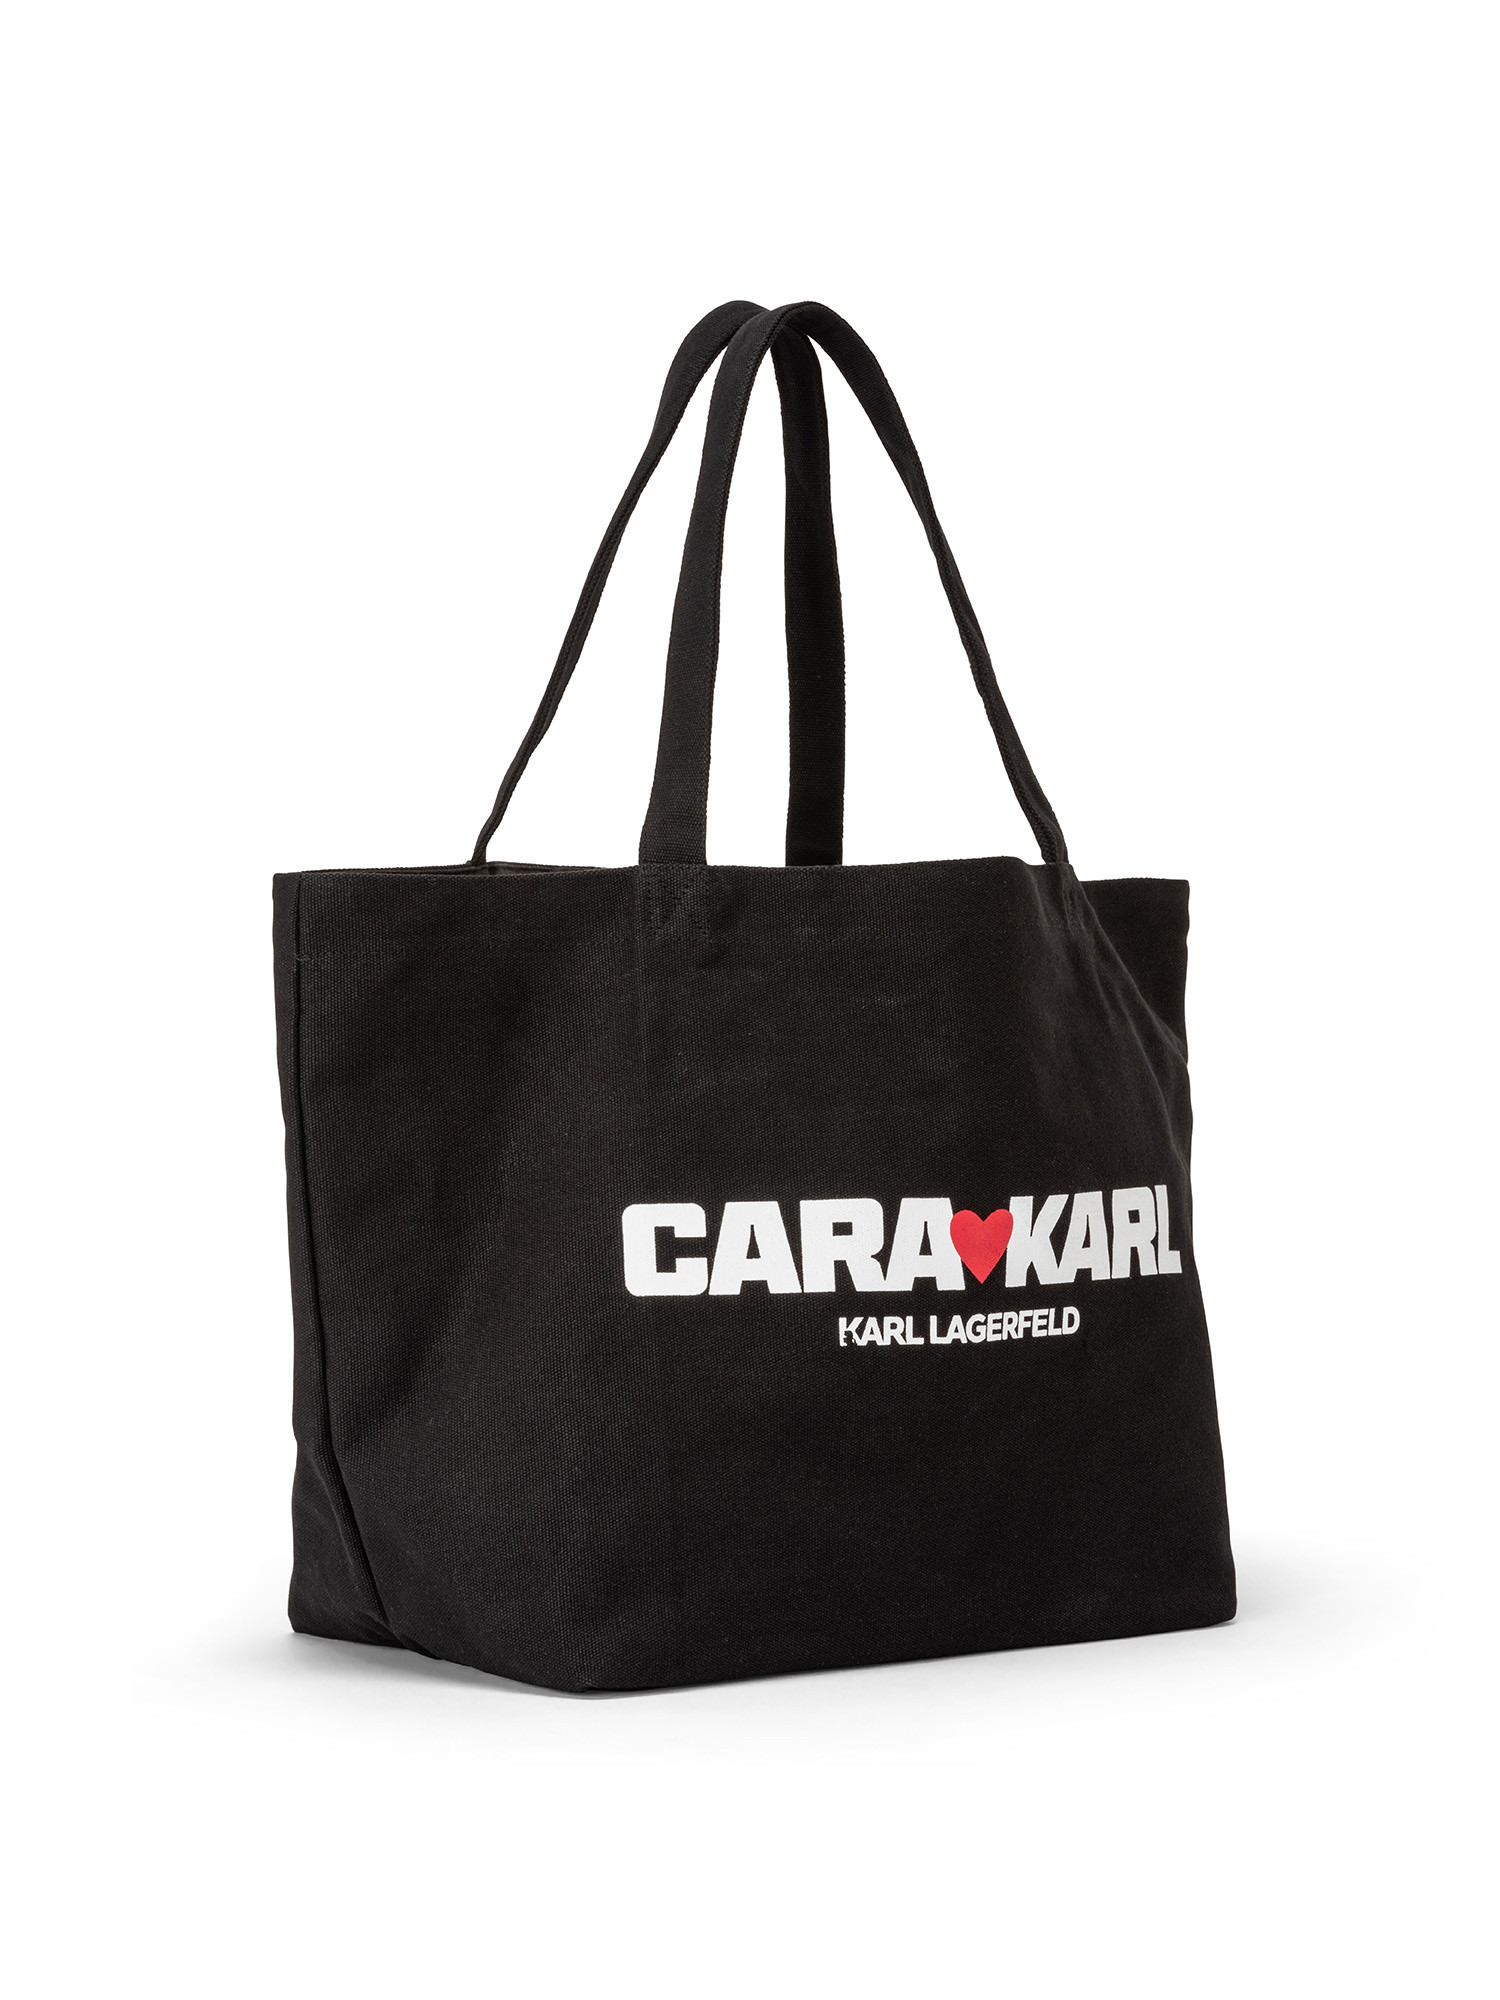 Karl Lagerfeld - Cara loves karl shopper in tela, Nero, large image number 1